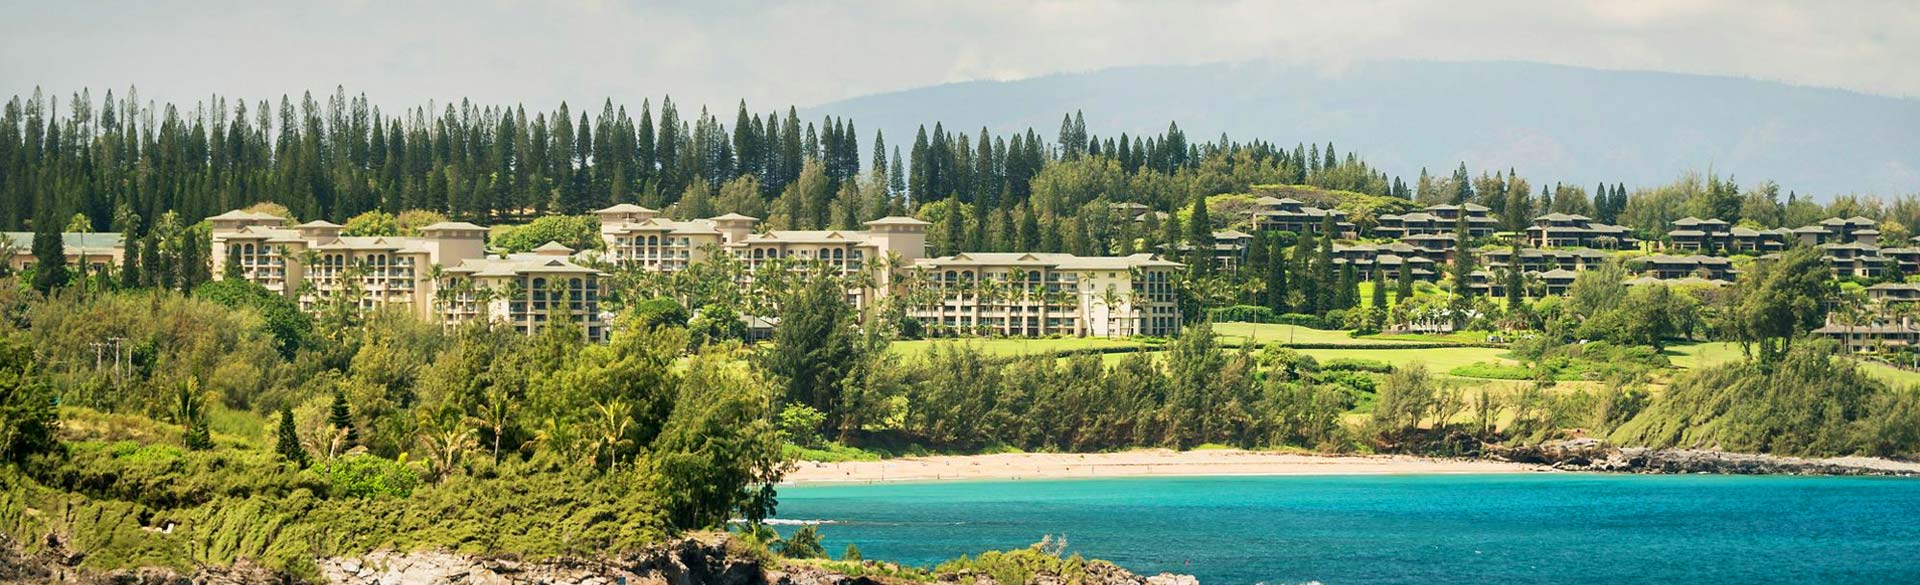 The Ritz Carlton Kapalua, Maui